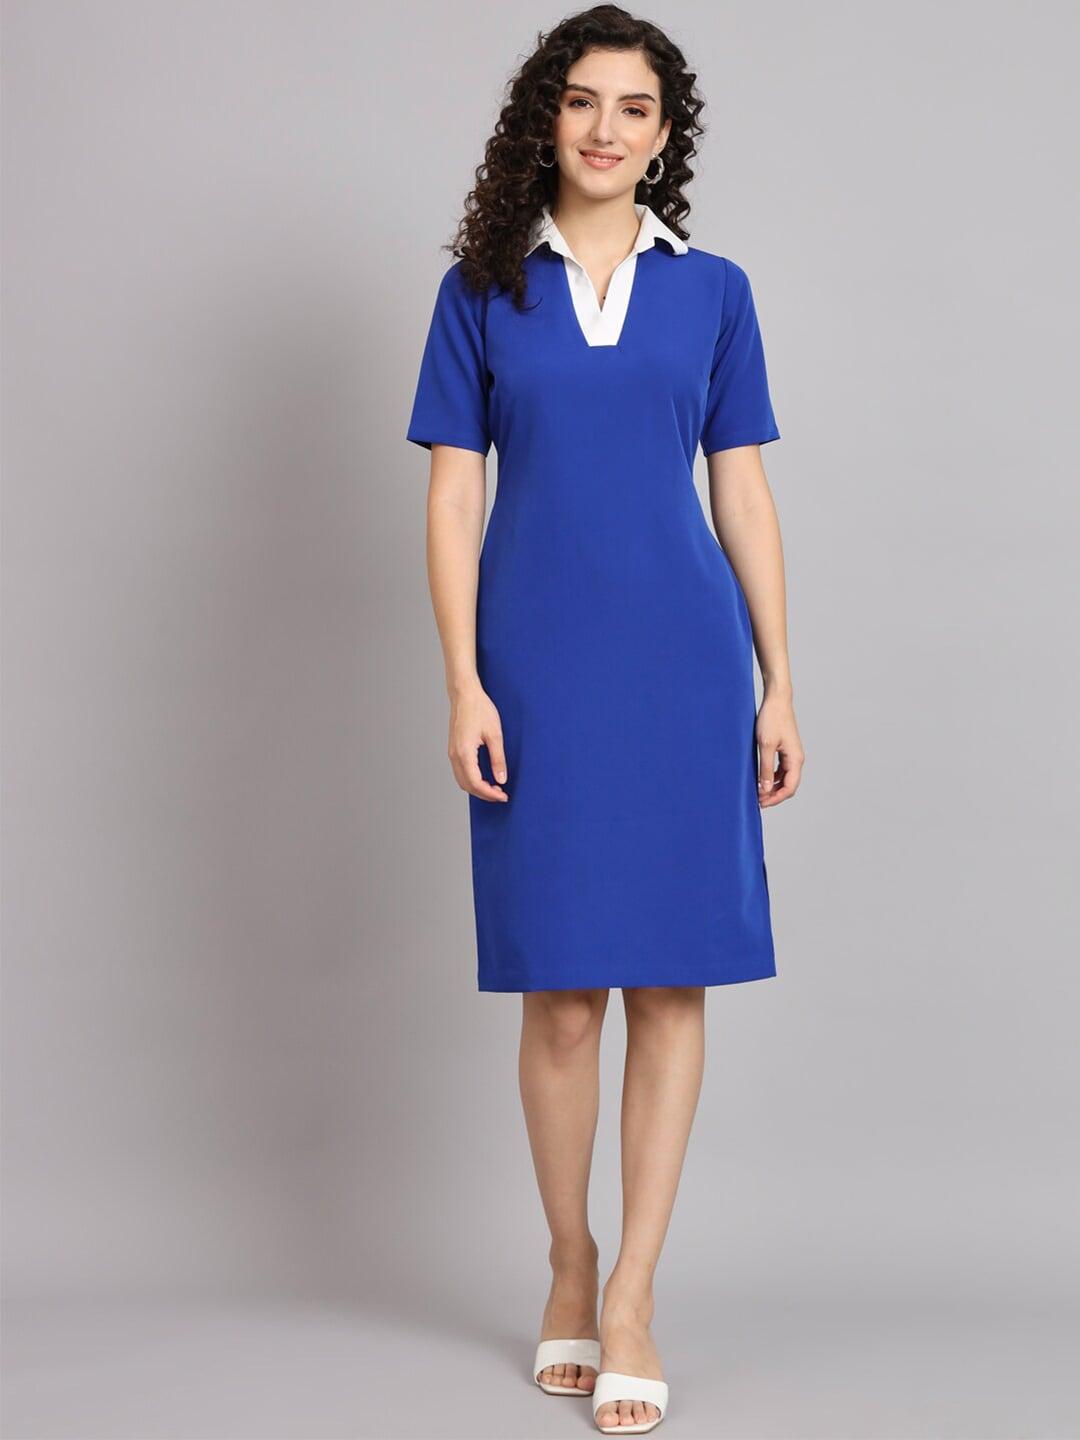 powersutra-blue-sheath-dress